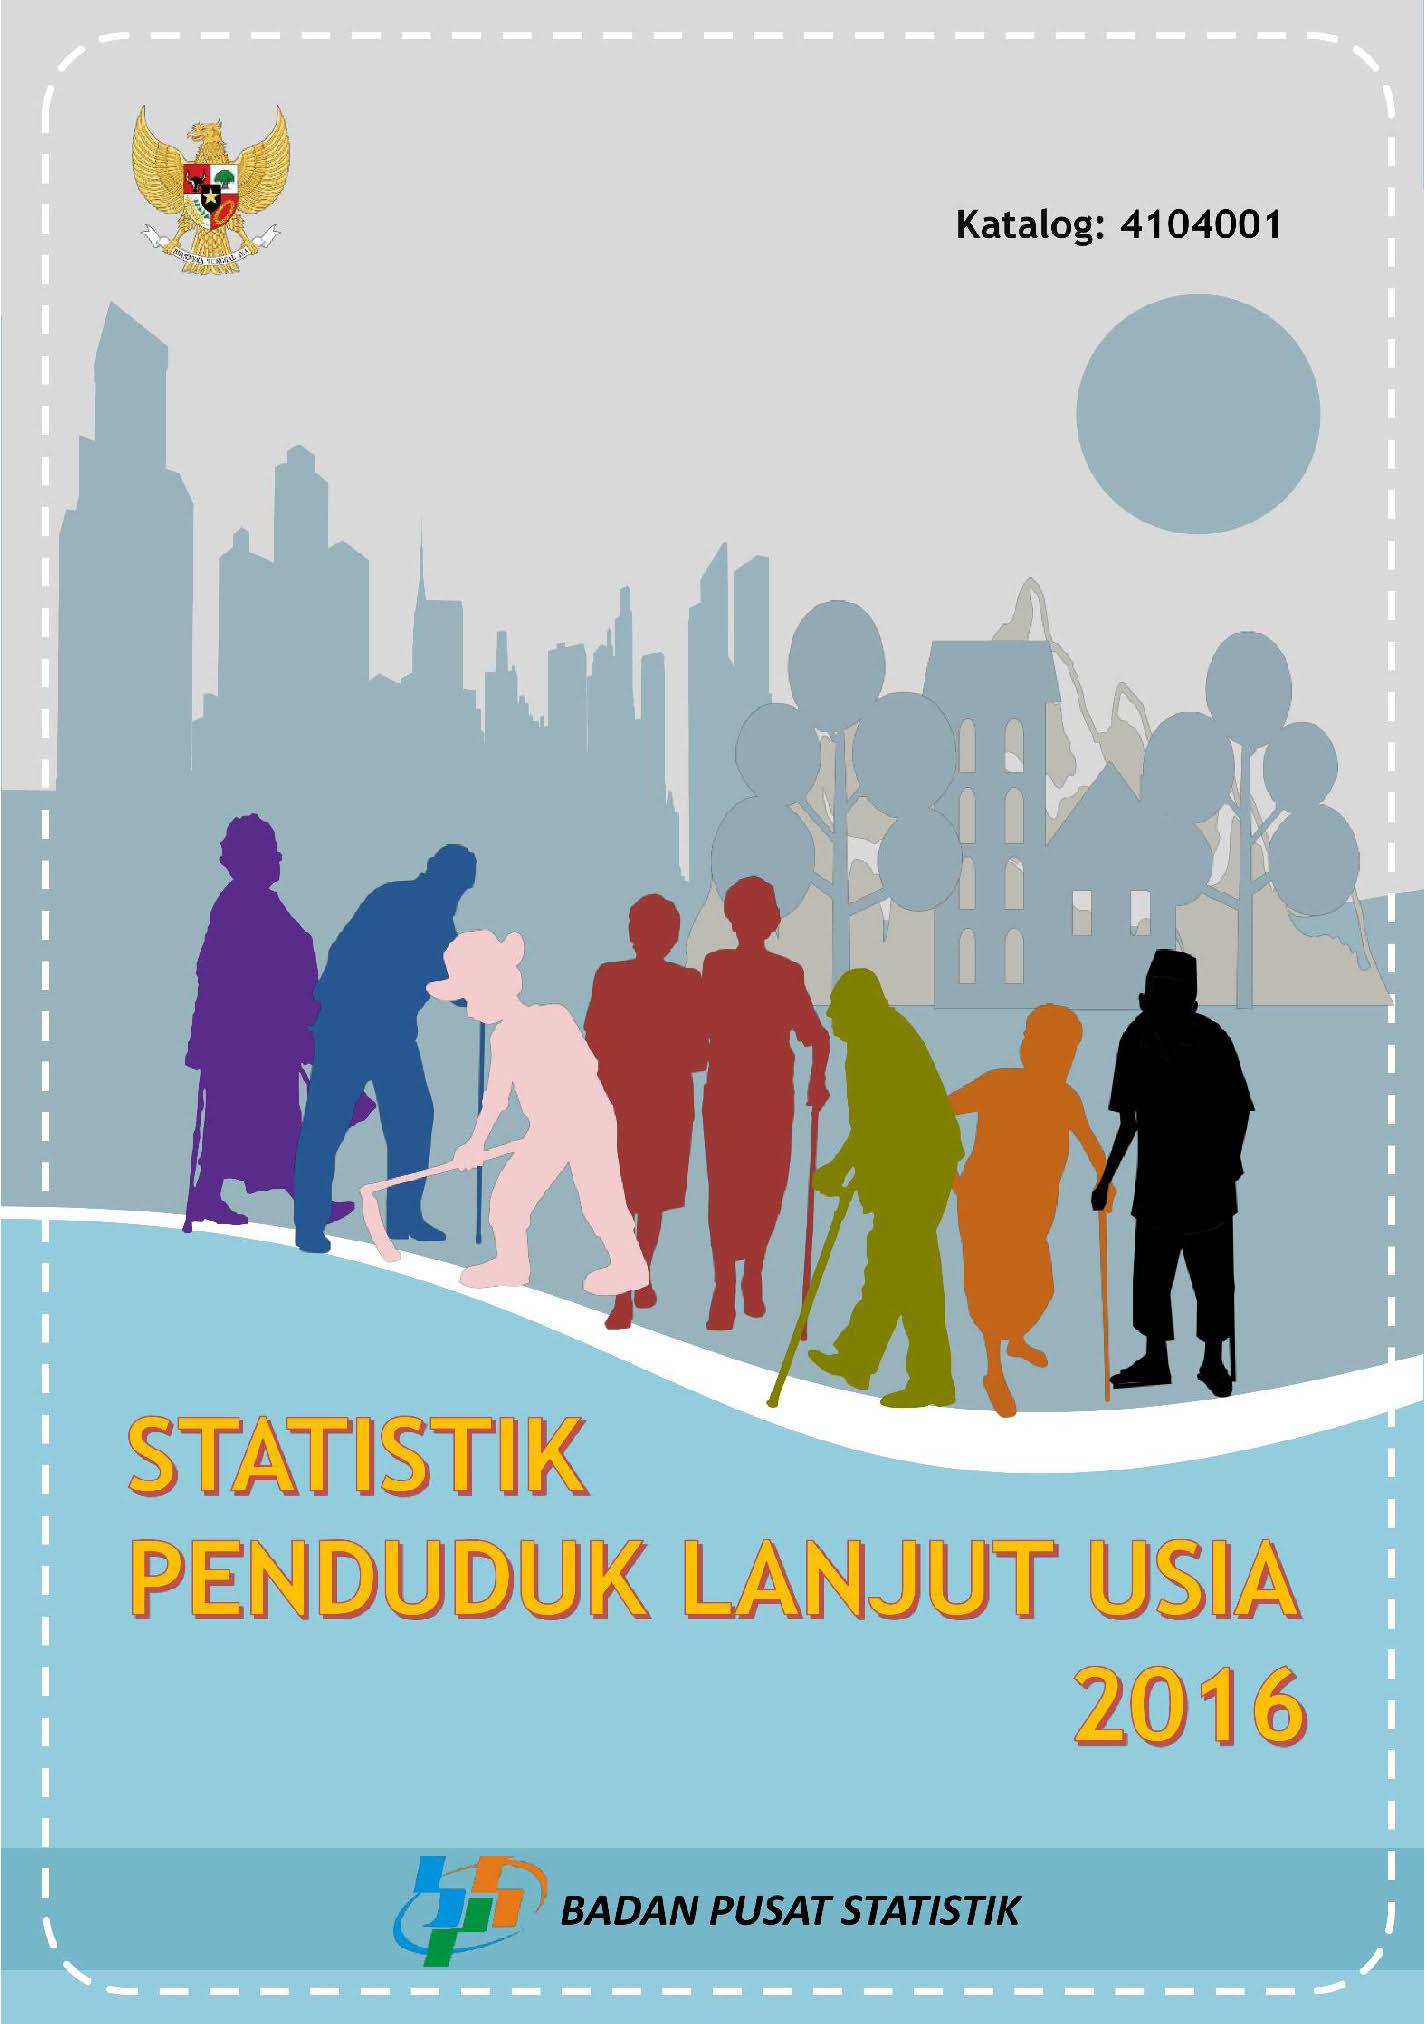 Statistics of Aging Population 2016